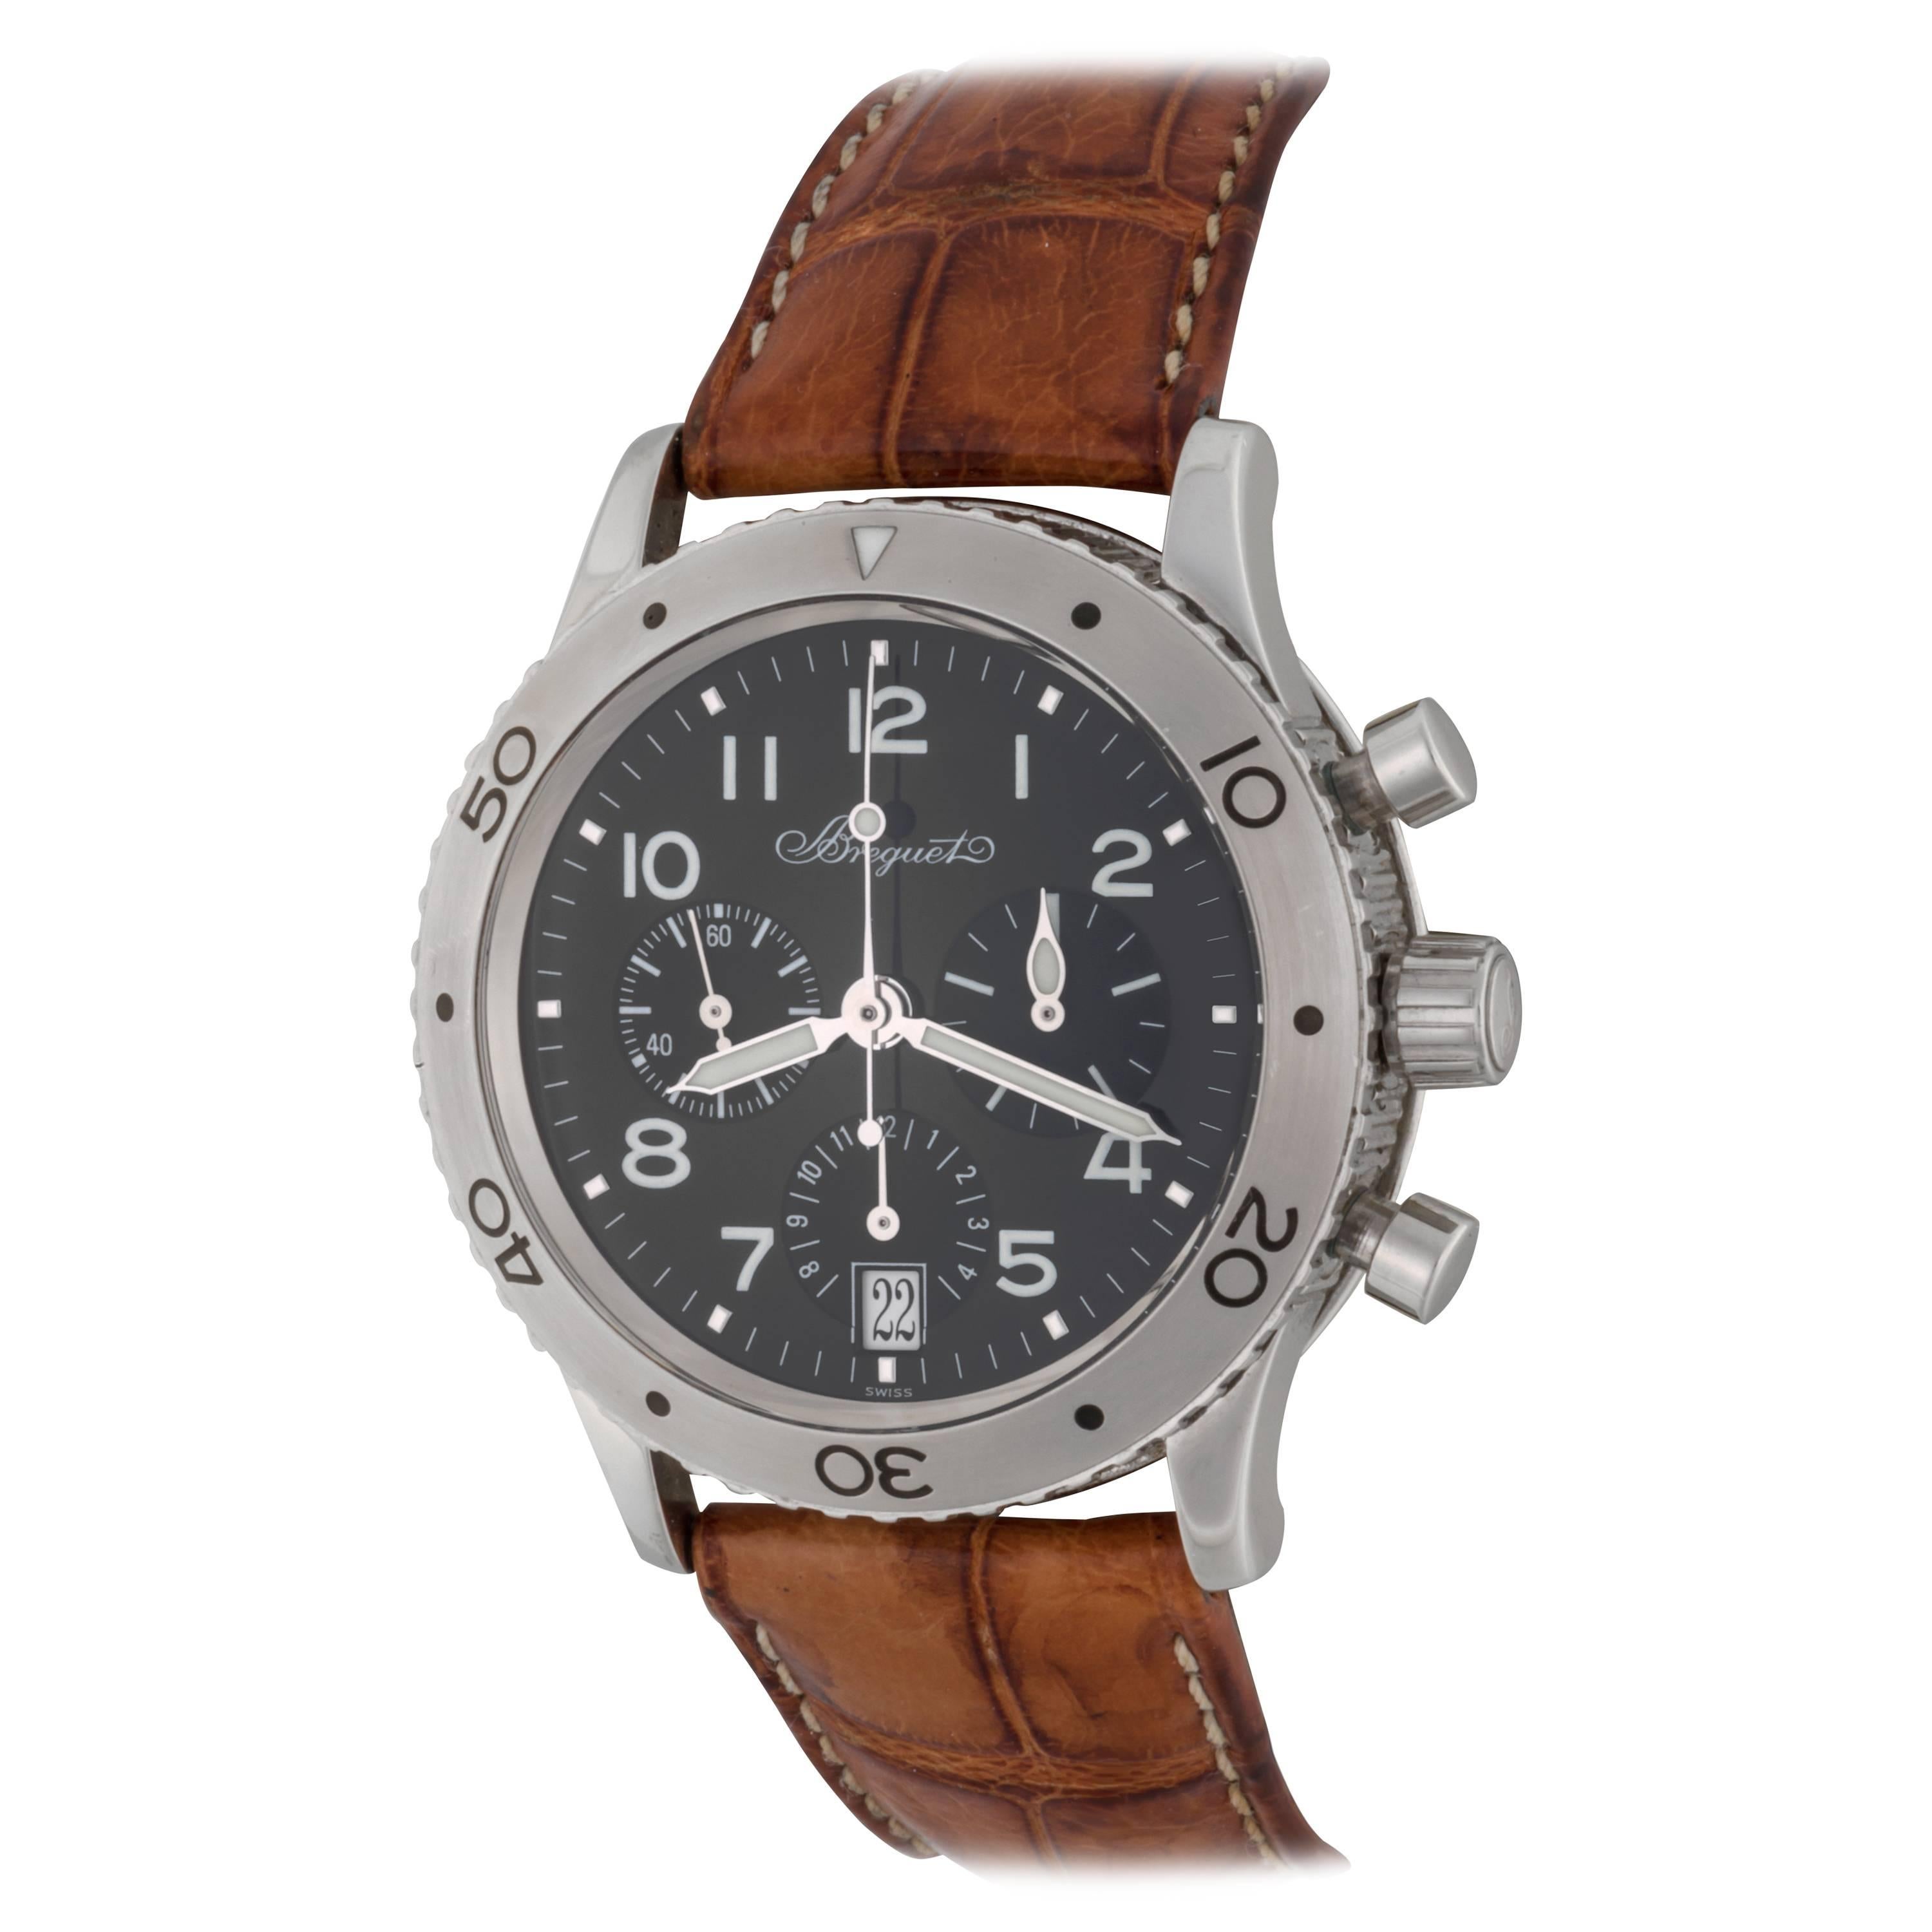 Breguet Stainless Steel Transatlantic Chronograph Automatic Wristwatch 